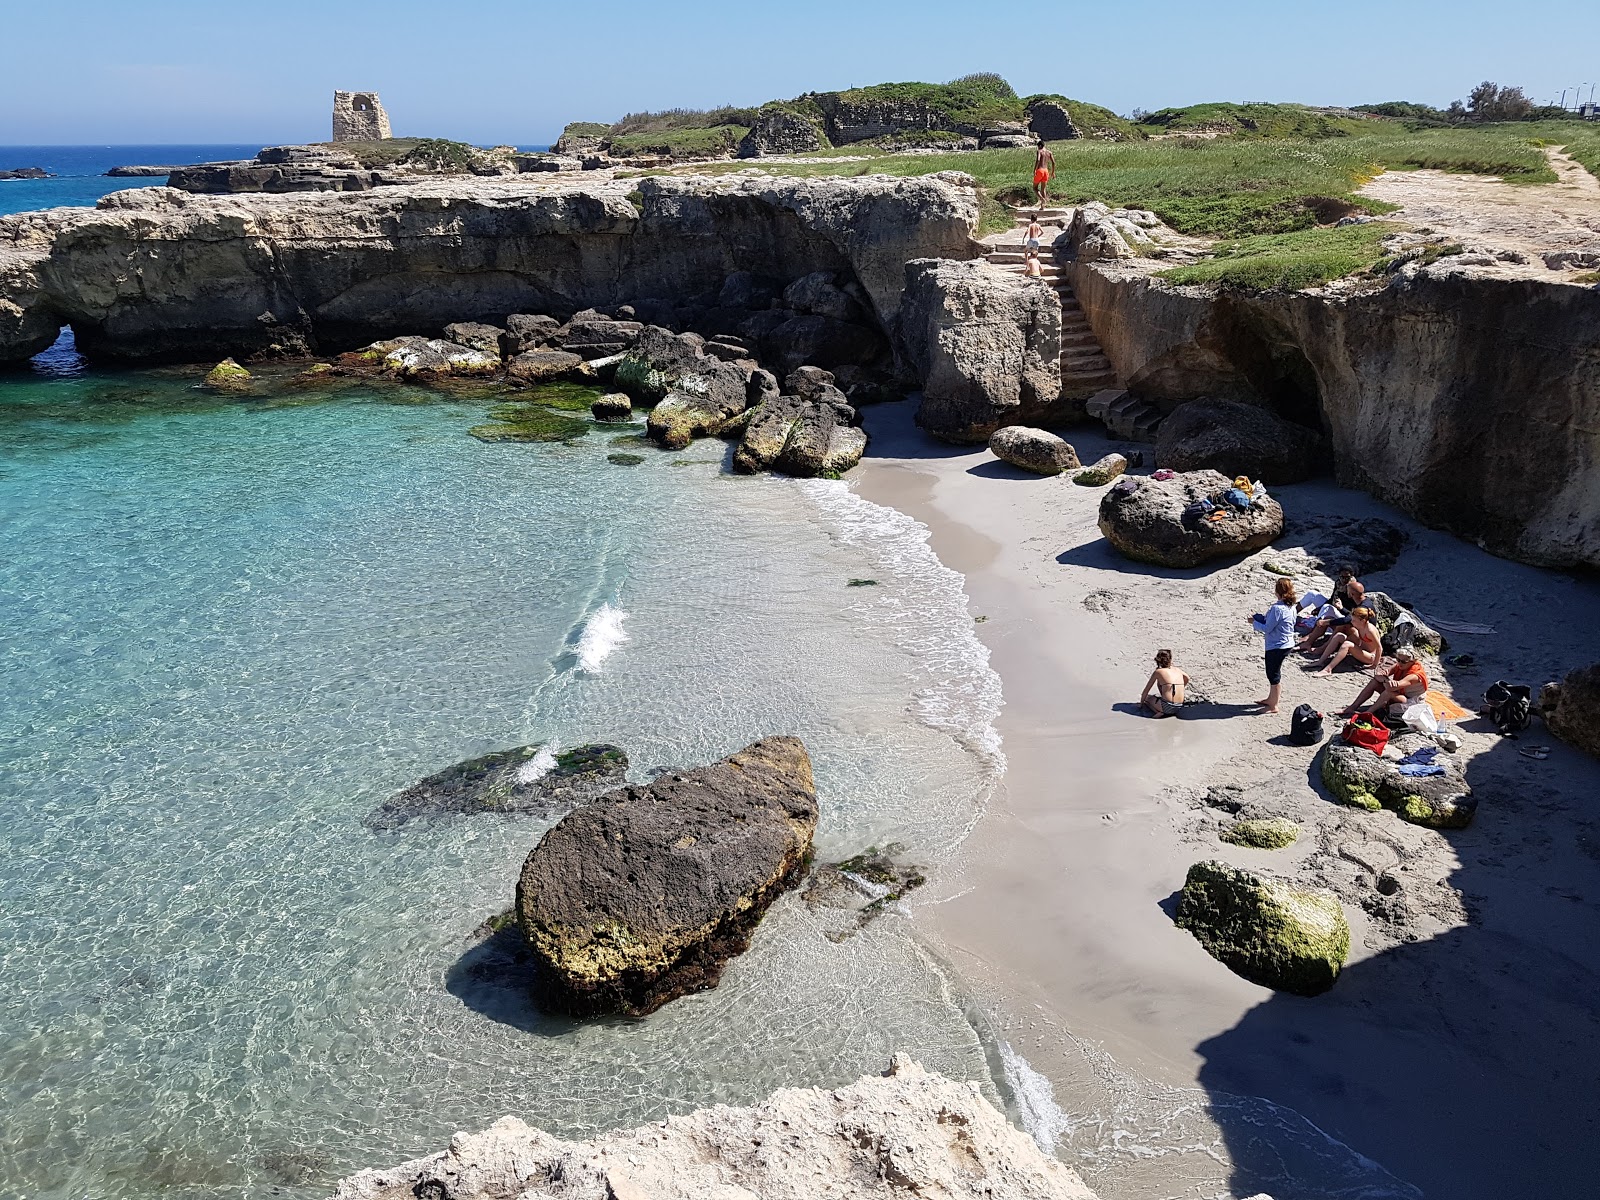 Fotografija Spiaggia di Portulignu z modra čista voda površino